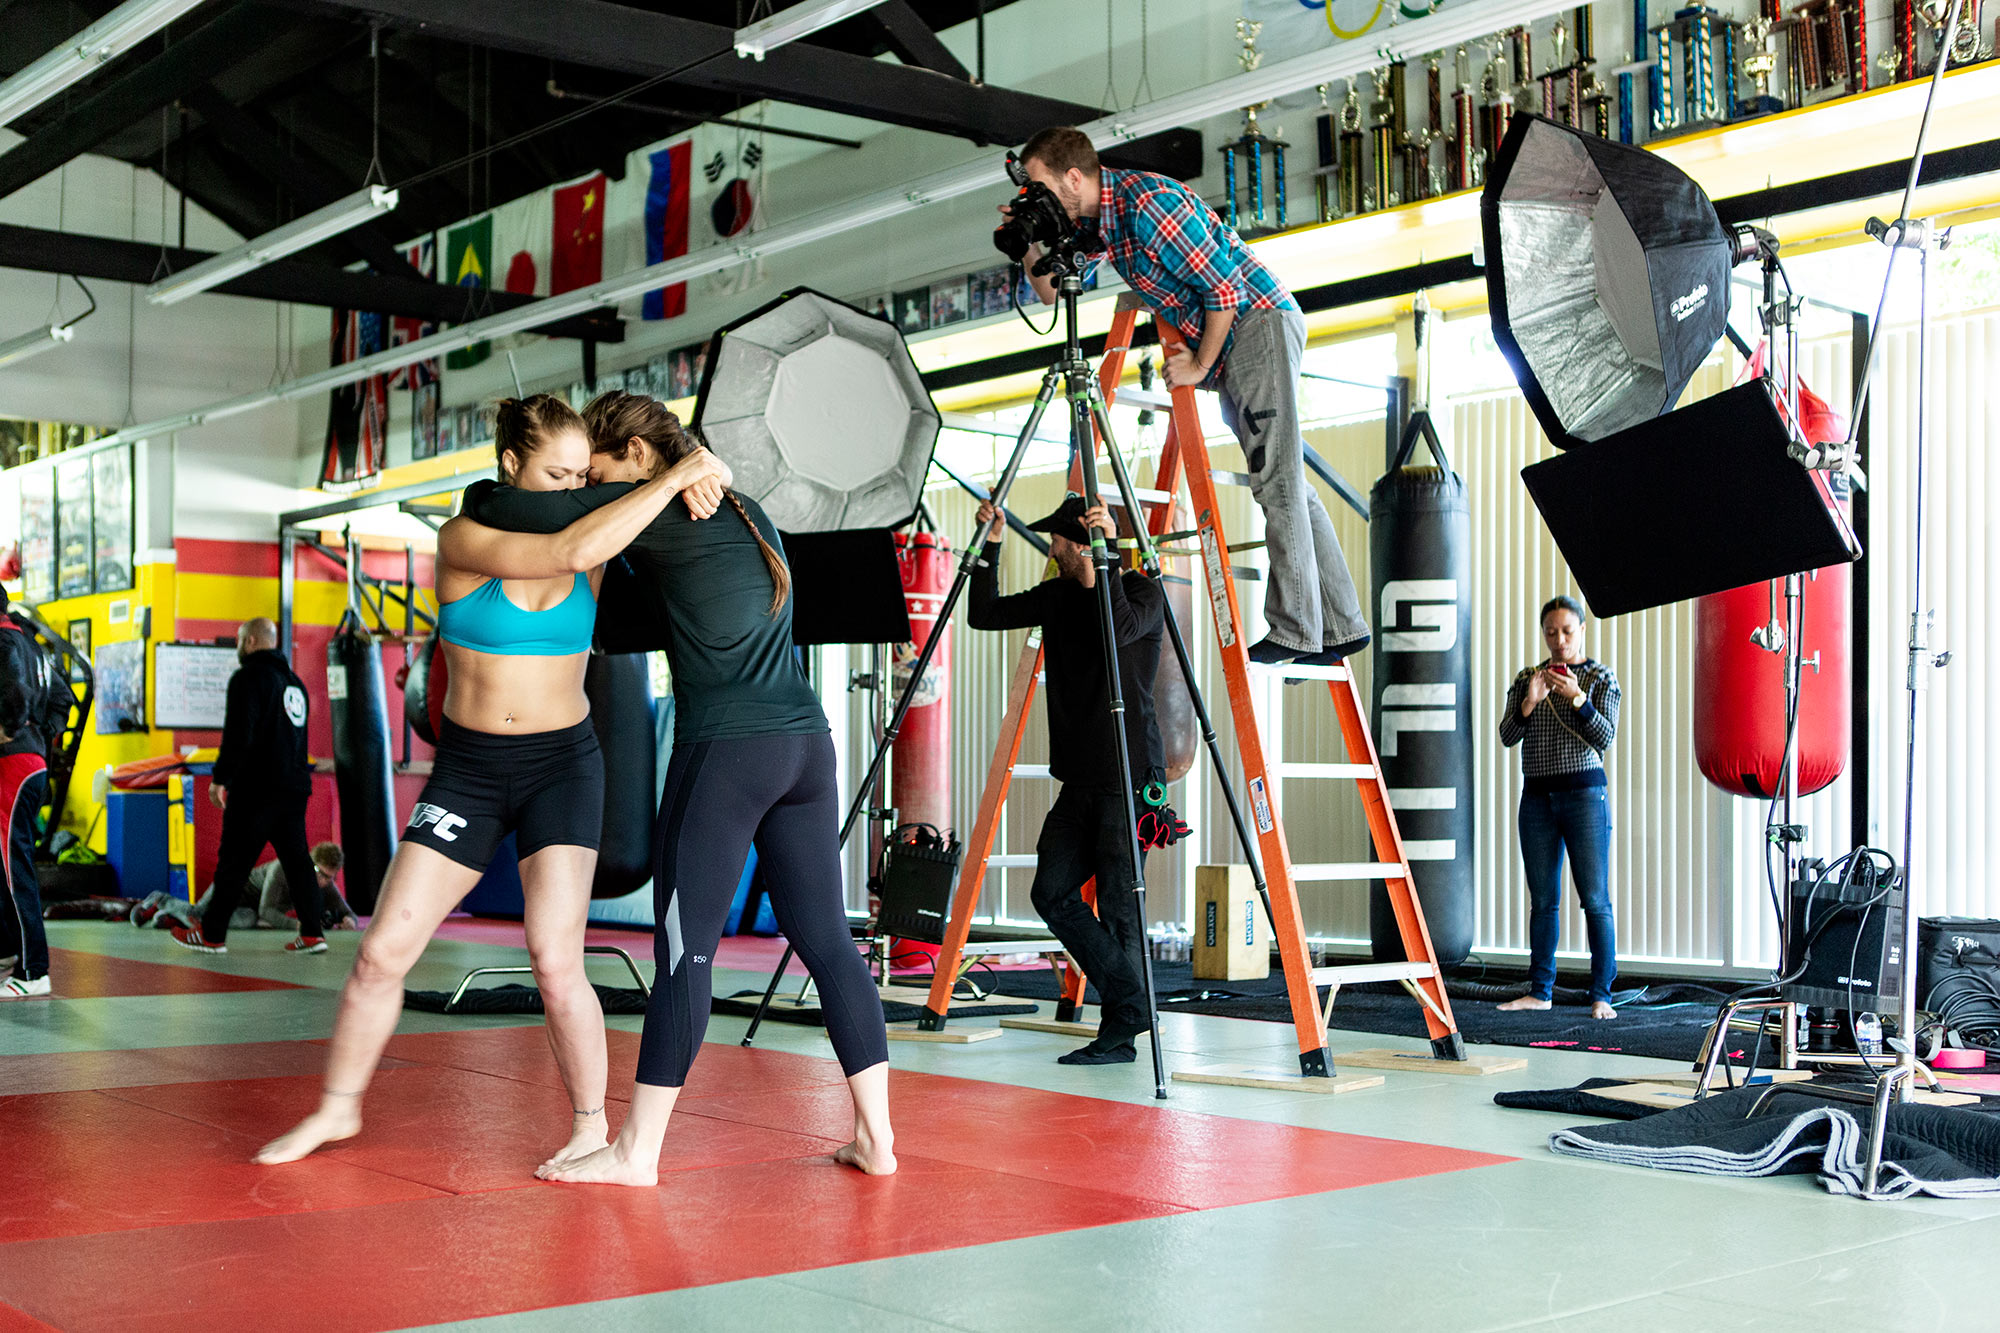 Philadelphia Sports Photographer Steve Boyle  - Behind the Scenes Photoshoot - Ronda Rousey